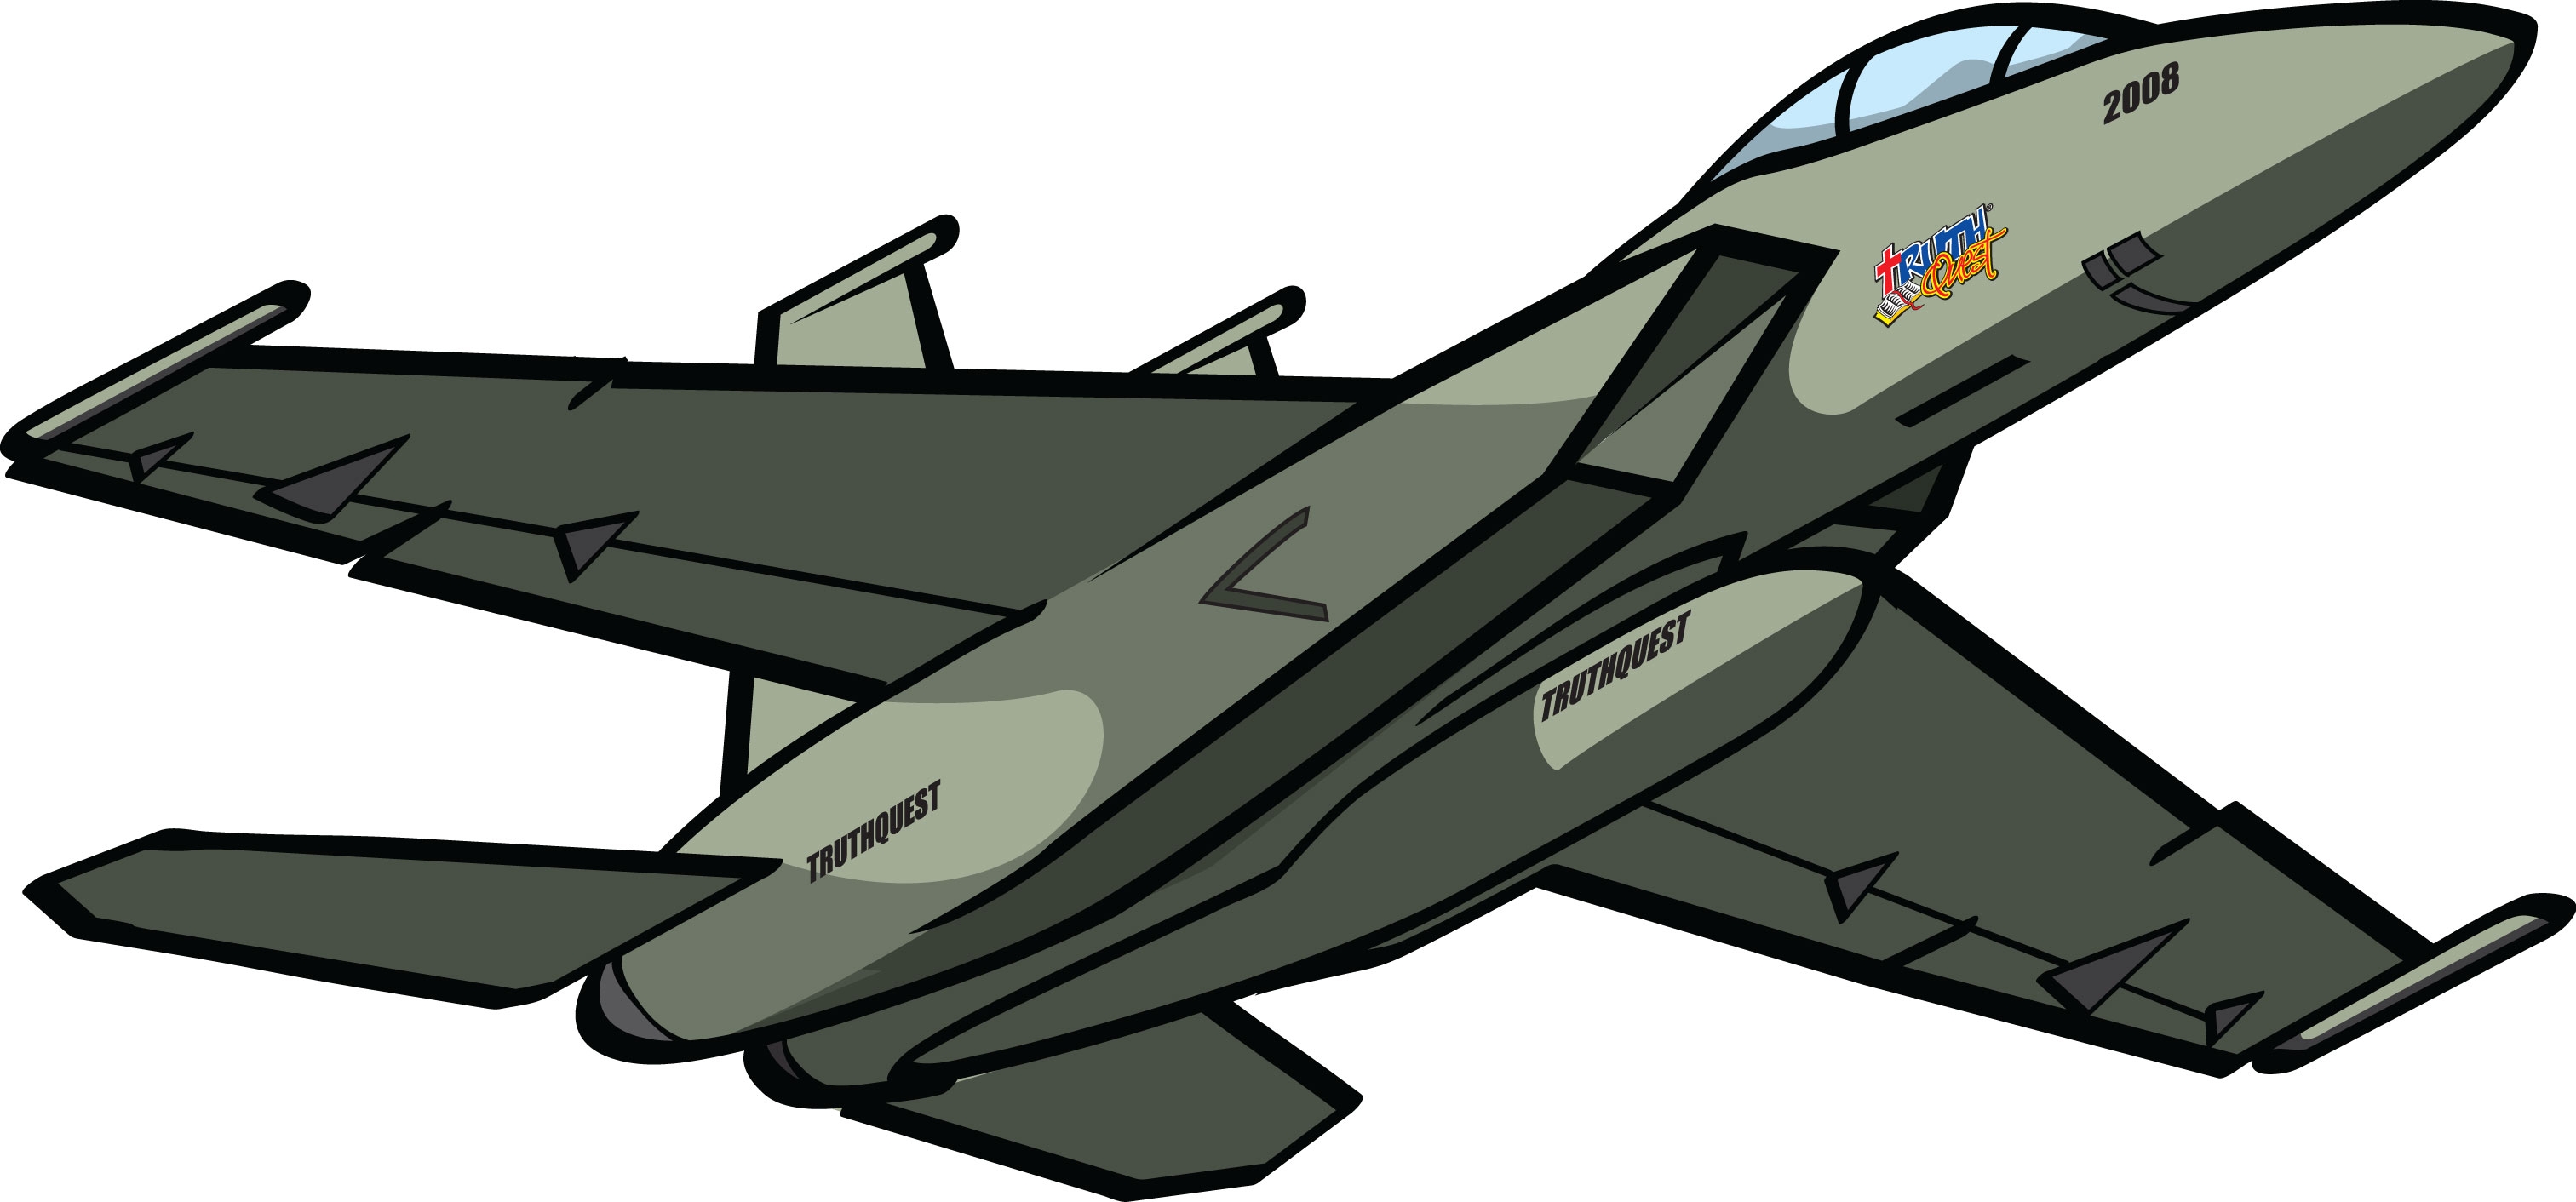 8. Paper Airplane Fighter Jet Illustration - wide 1